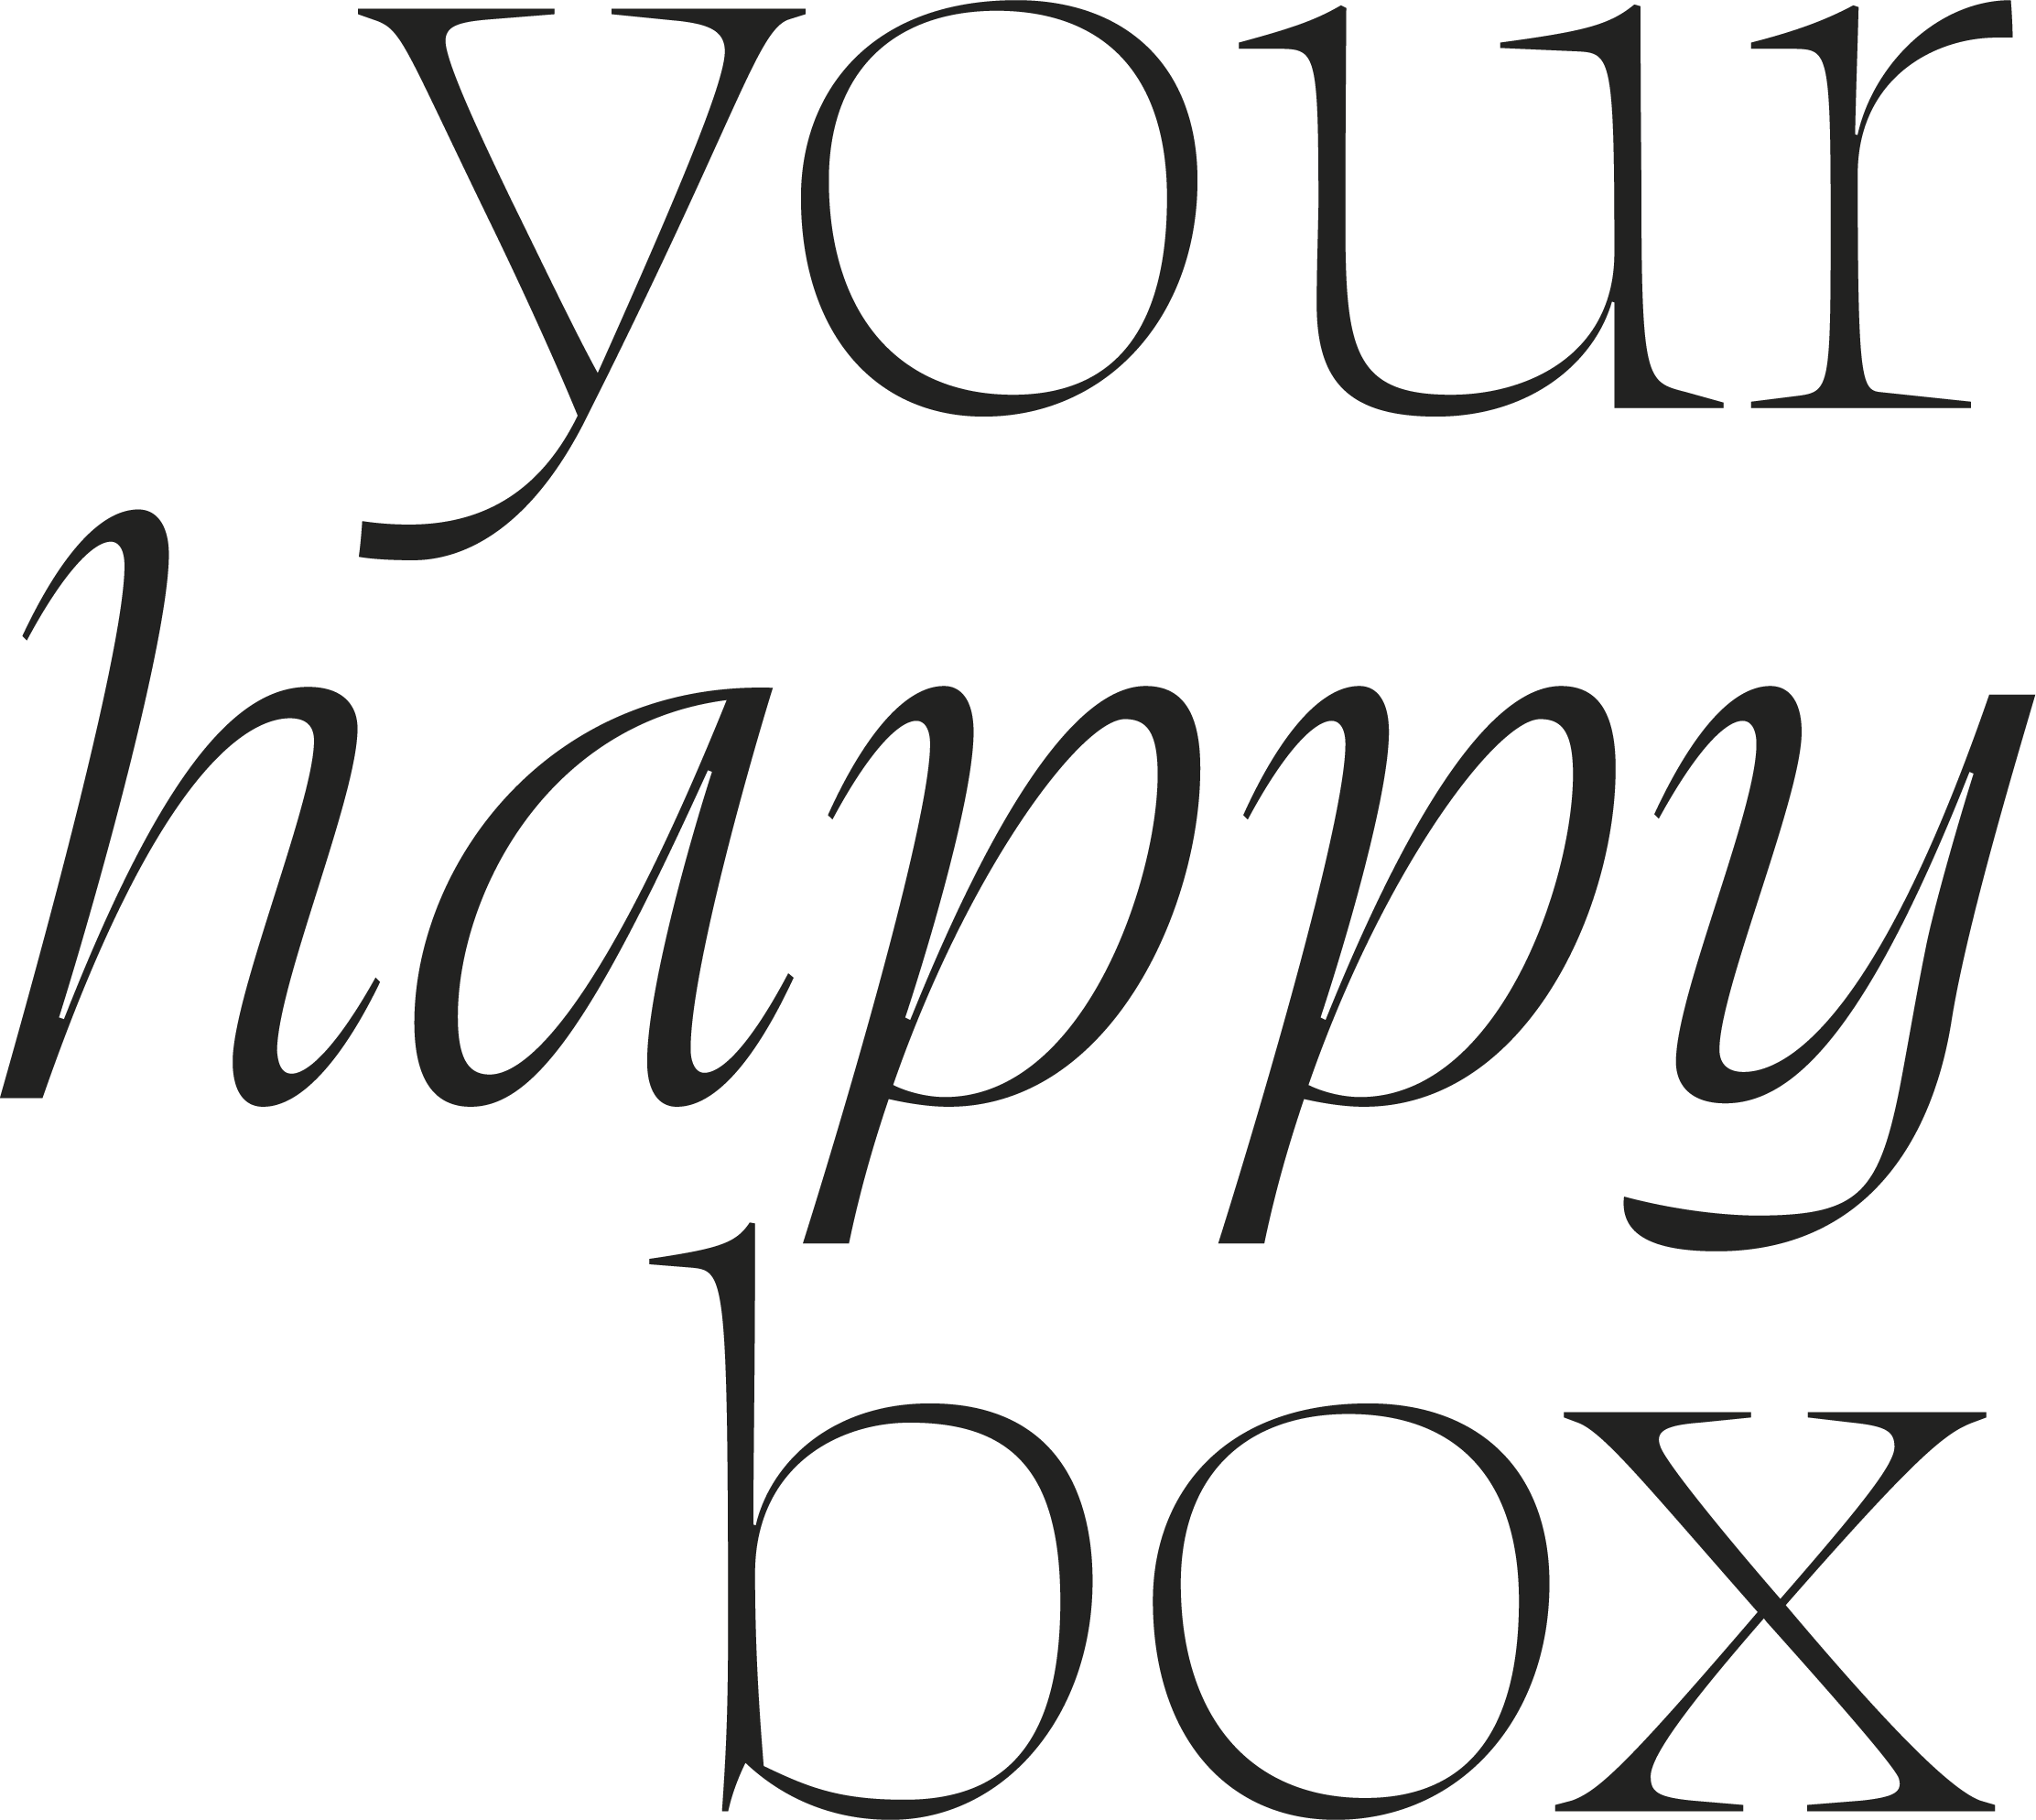 YourHappyBox